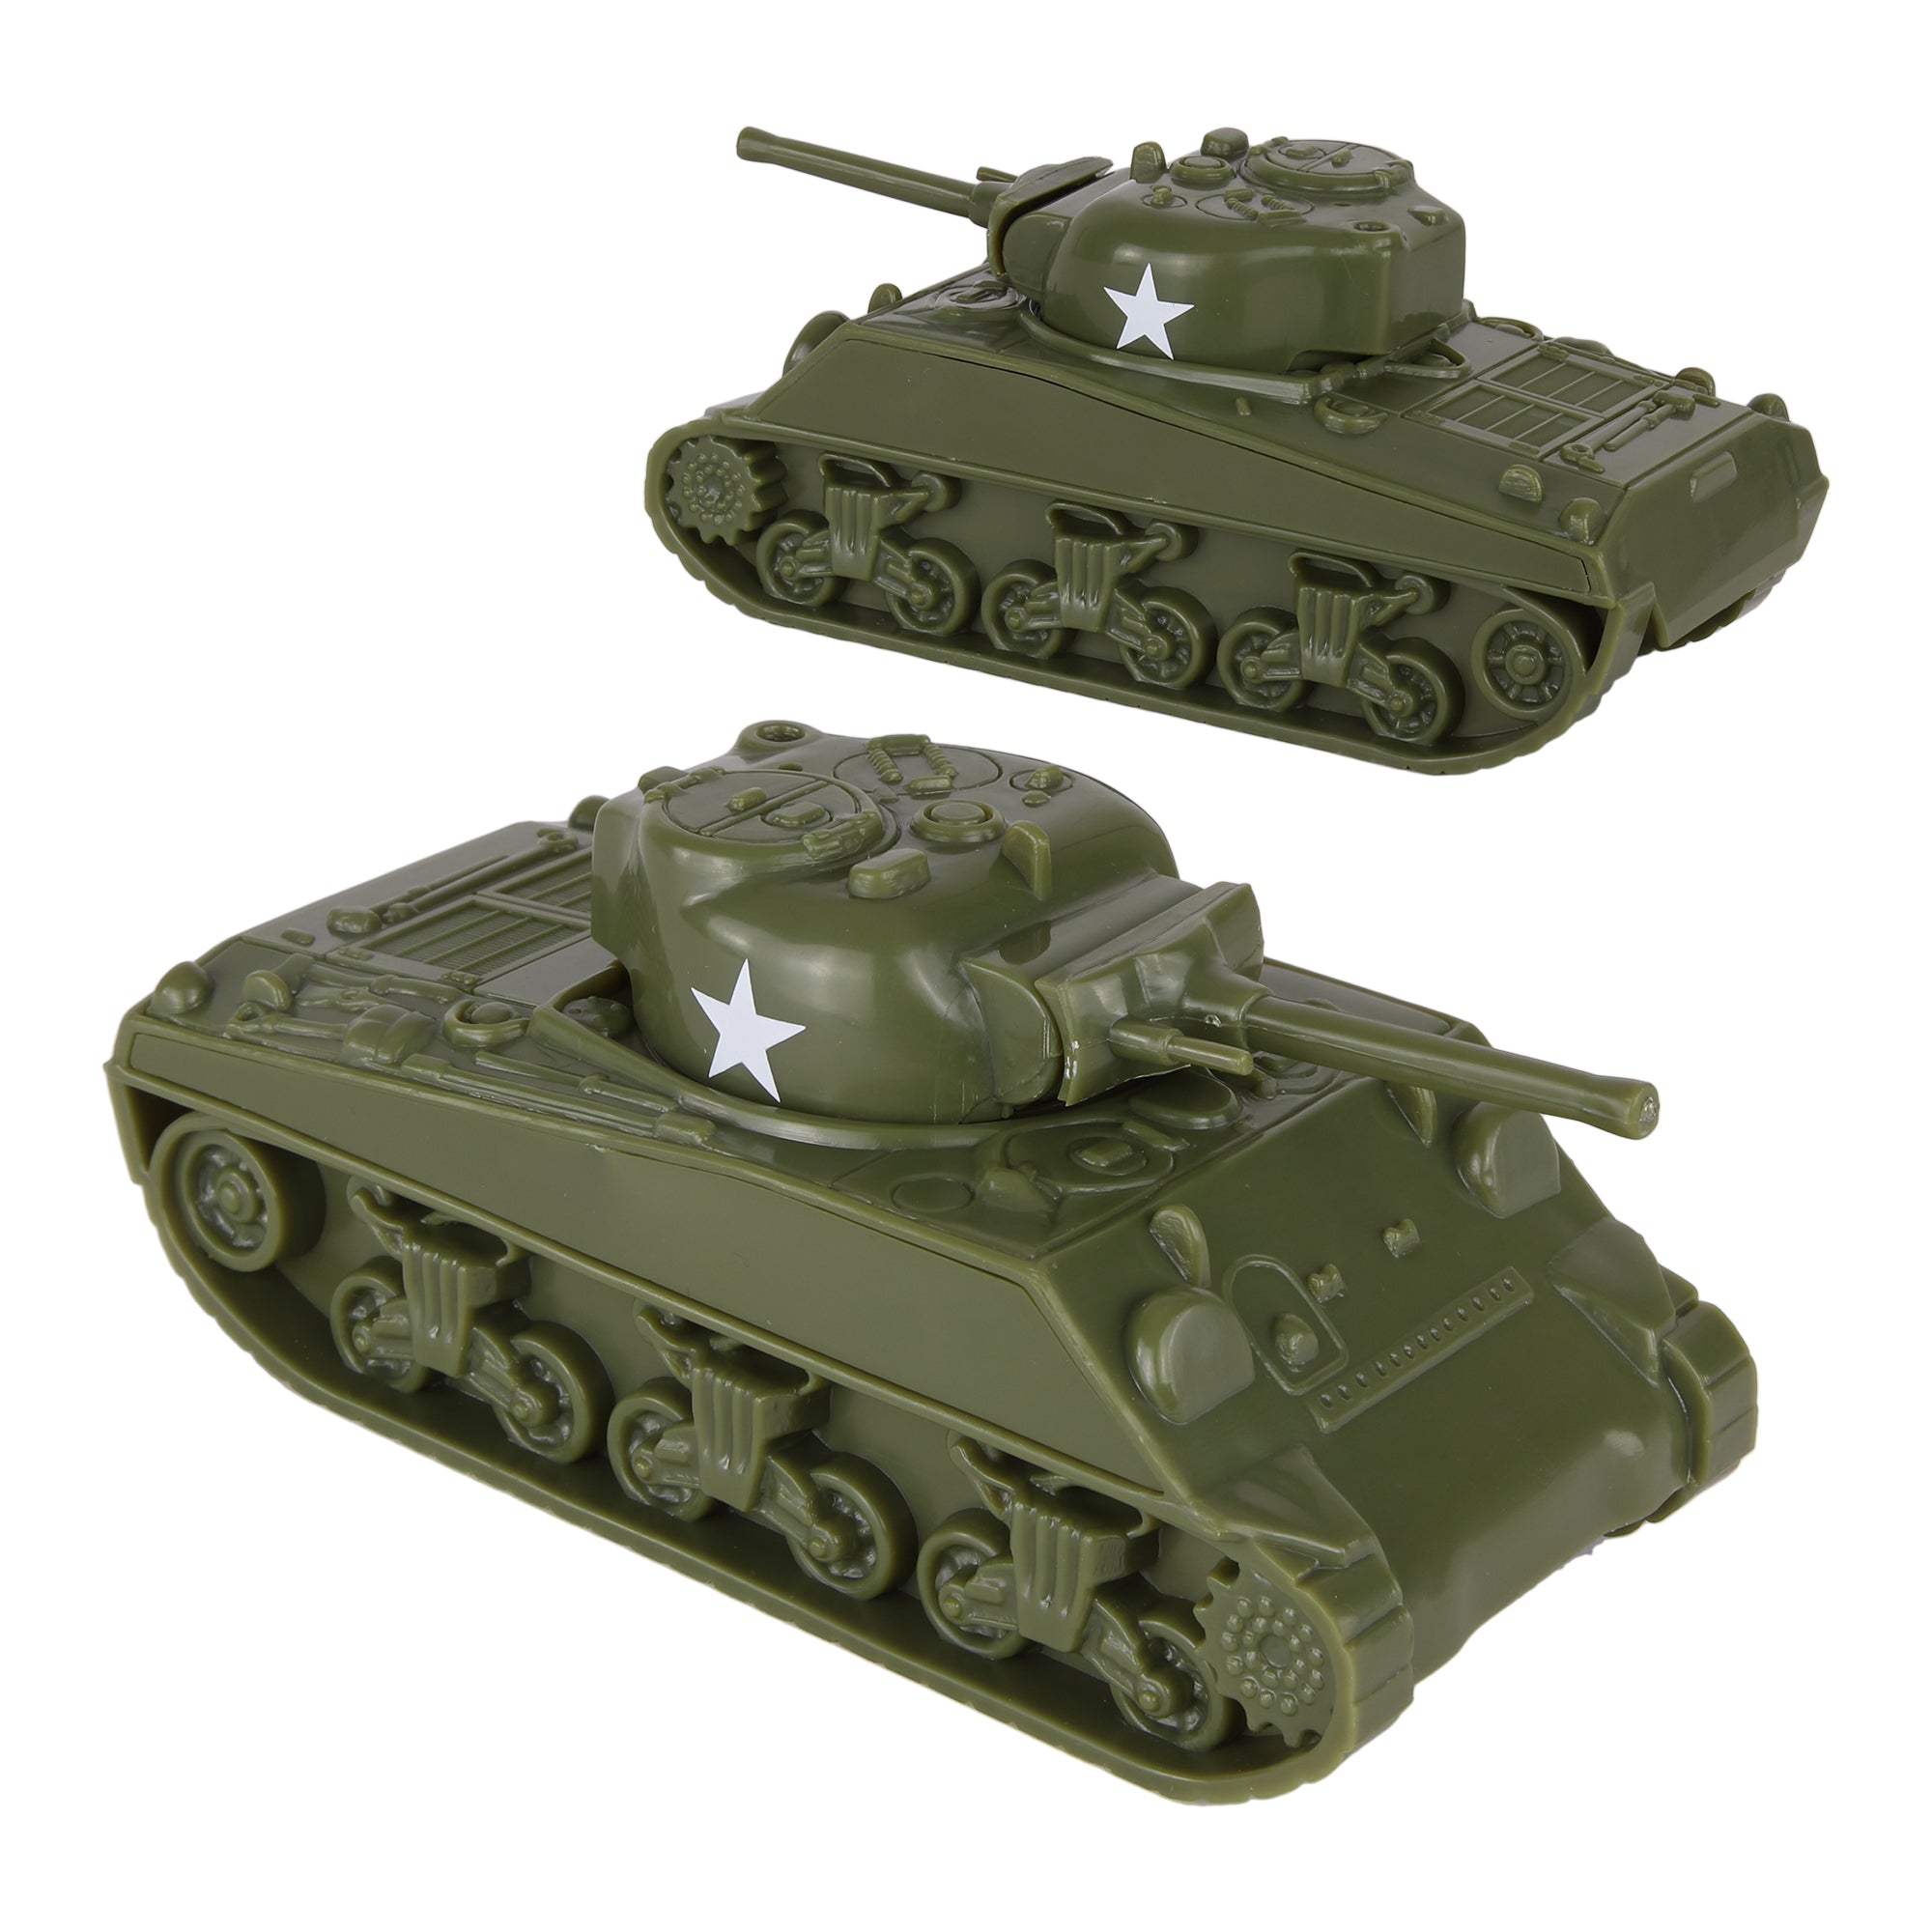  BMC WW2 Sherman M4 Tank - Dark Green 1:32 Military Vehicle for  Plastic Army Men : Toys & Games